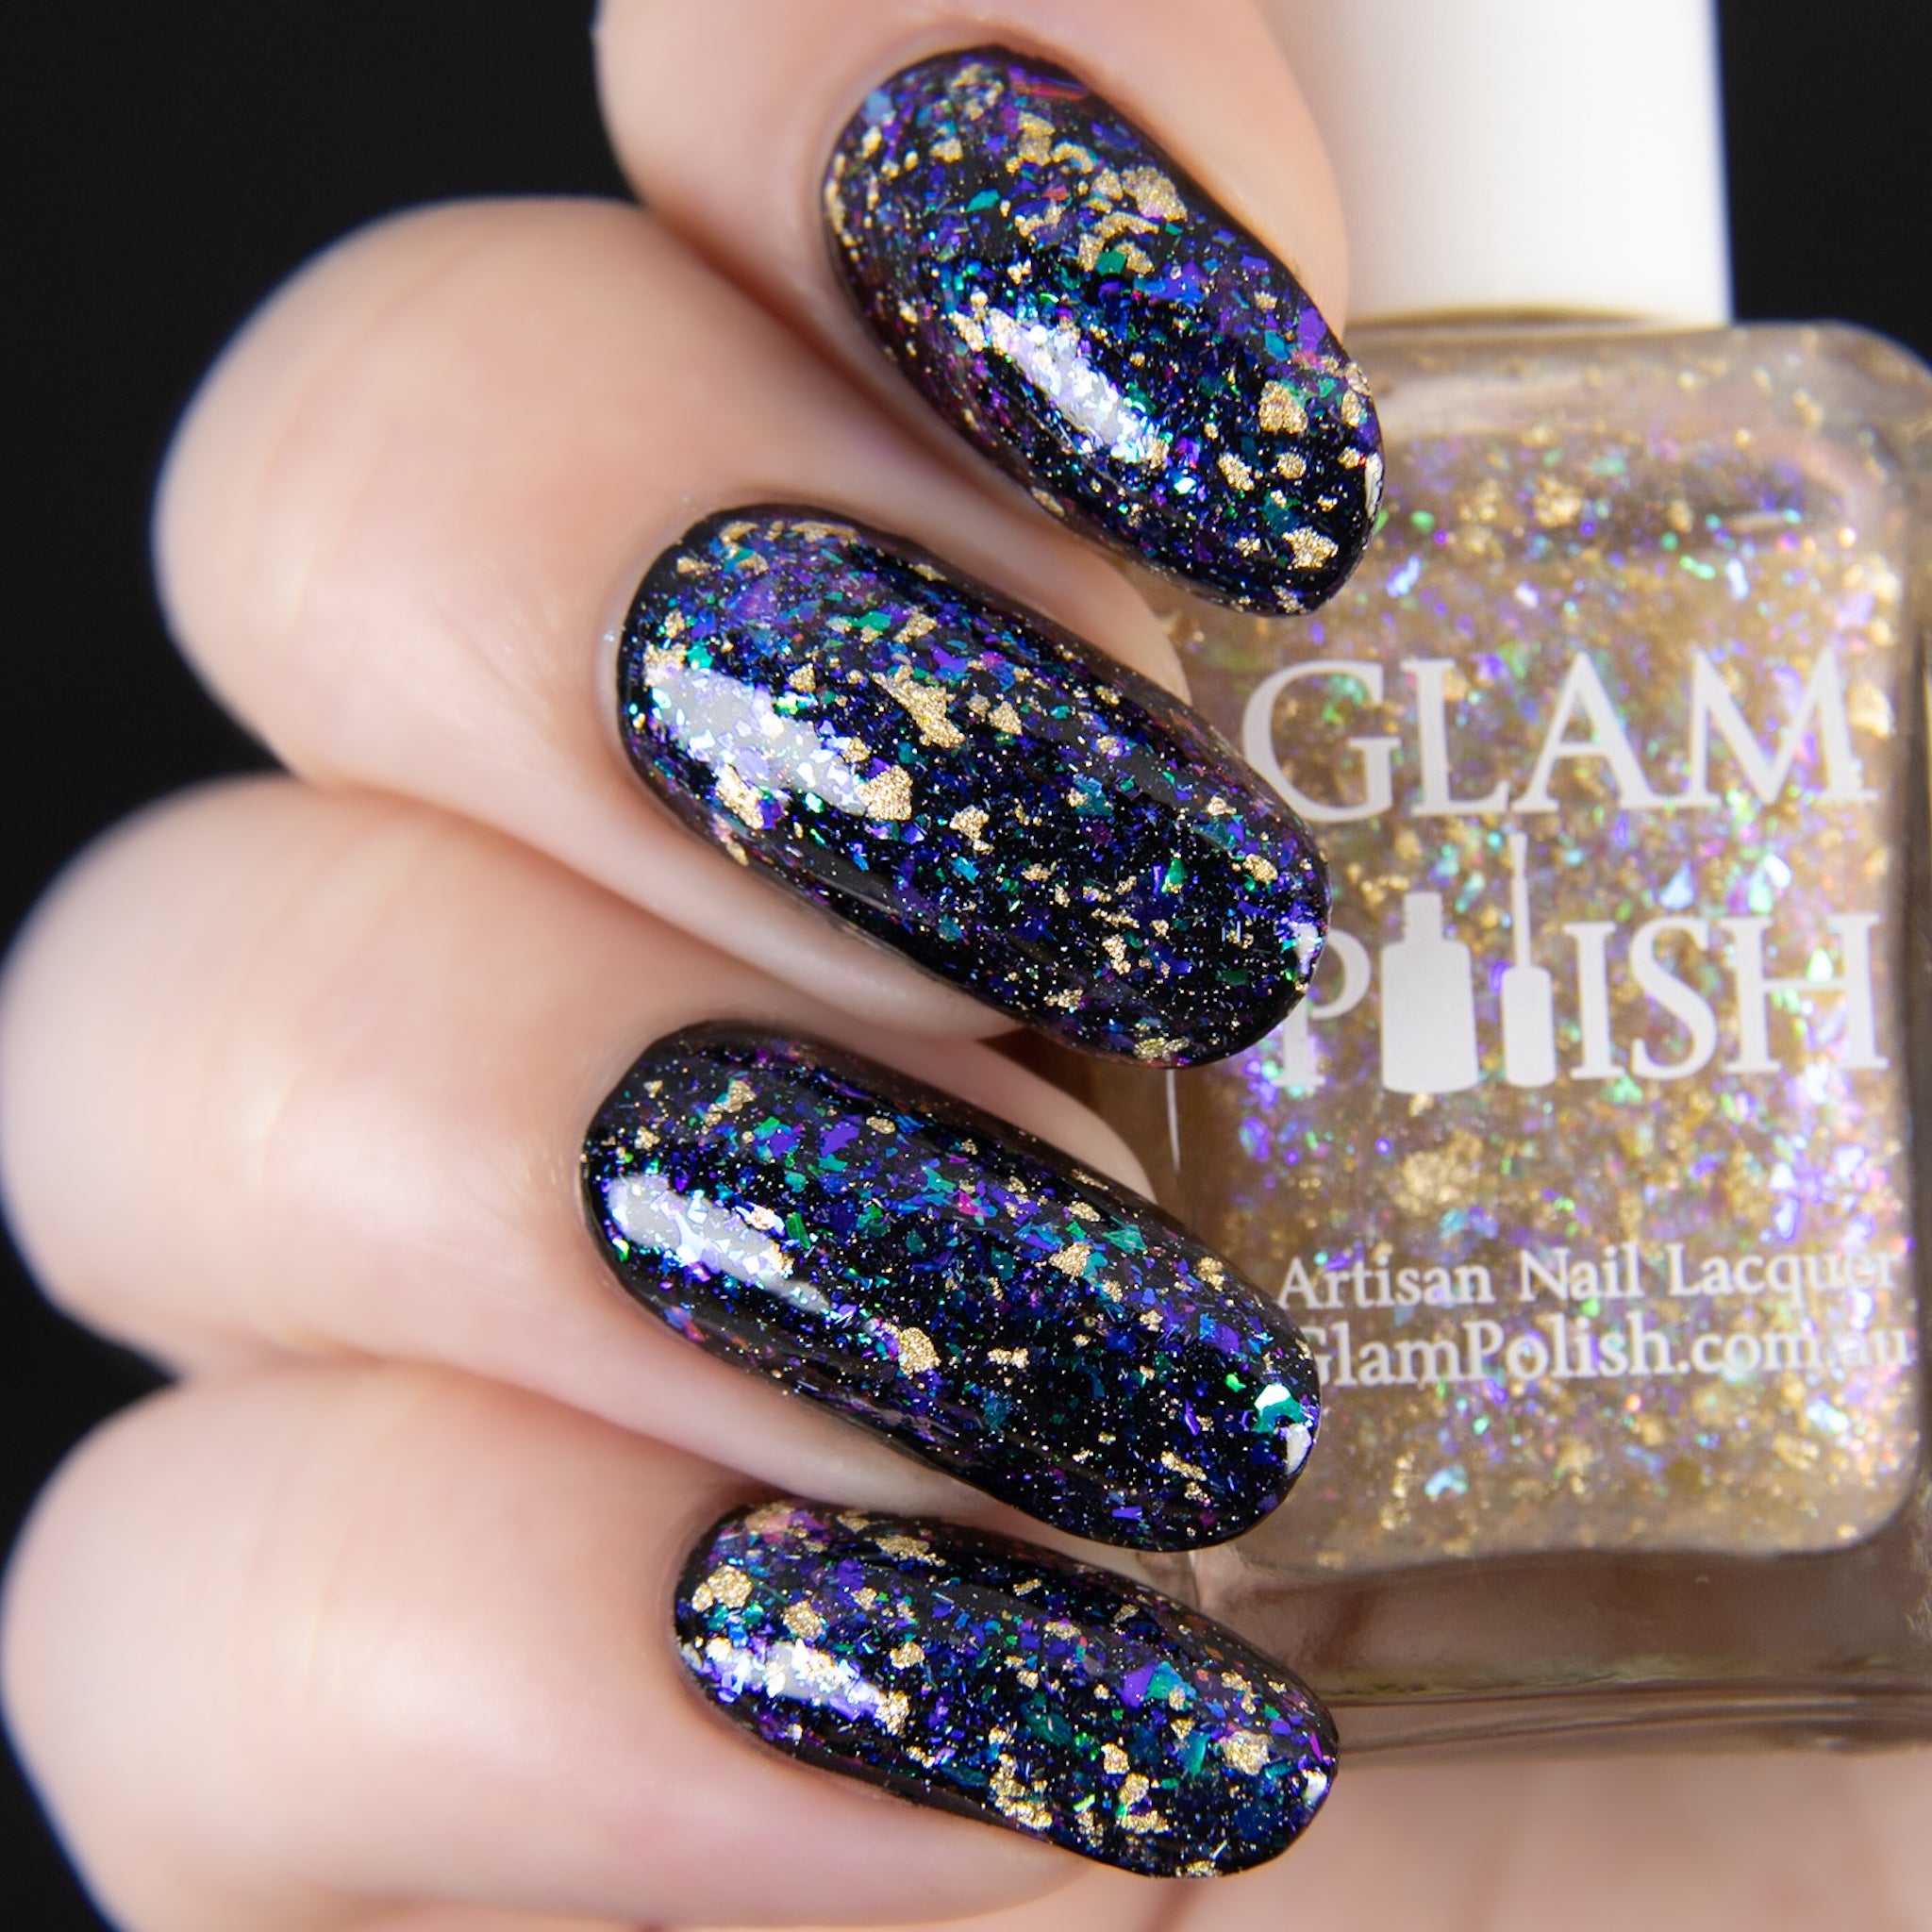 Glam All That Glitters Gold Glitter Nail Polish | Maniology